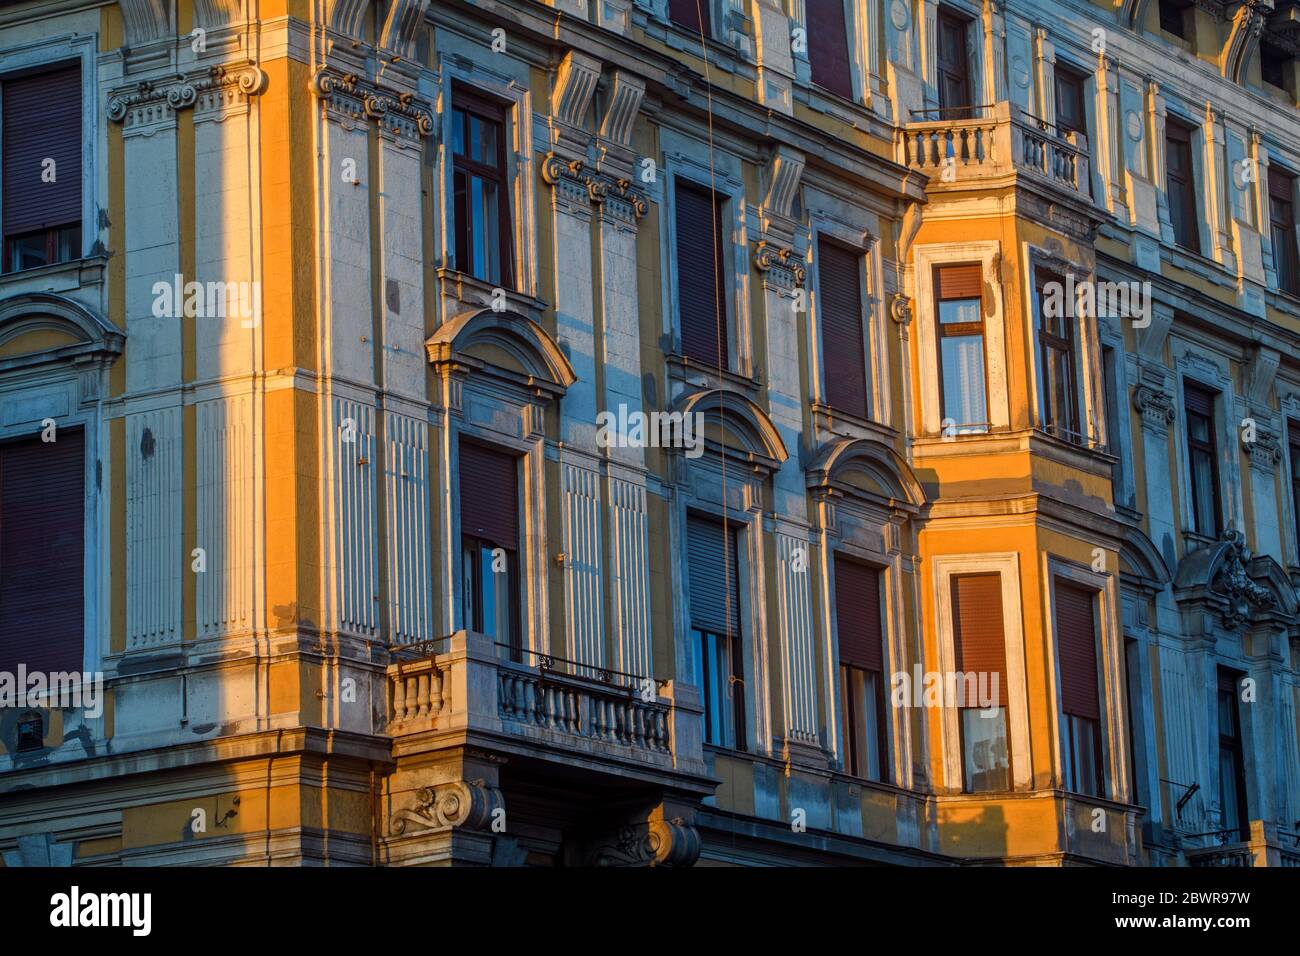 Centro de Budapest (Pest) - edificios de la ciudad a lo largo de Rakoczi UT, Budapest, Hungría Central. Foto de stock